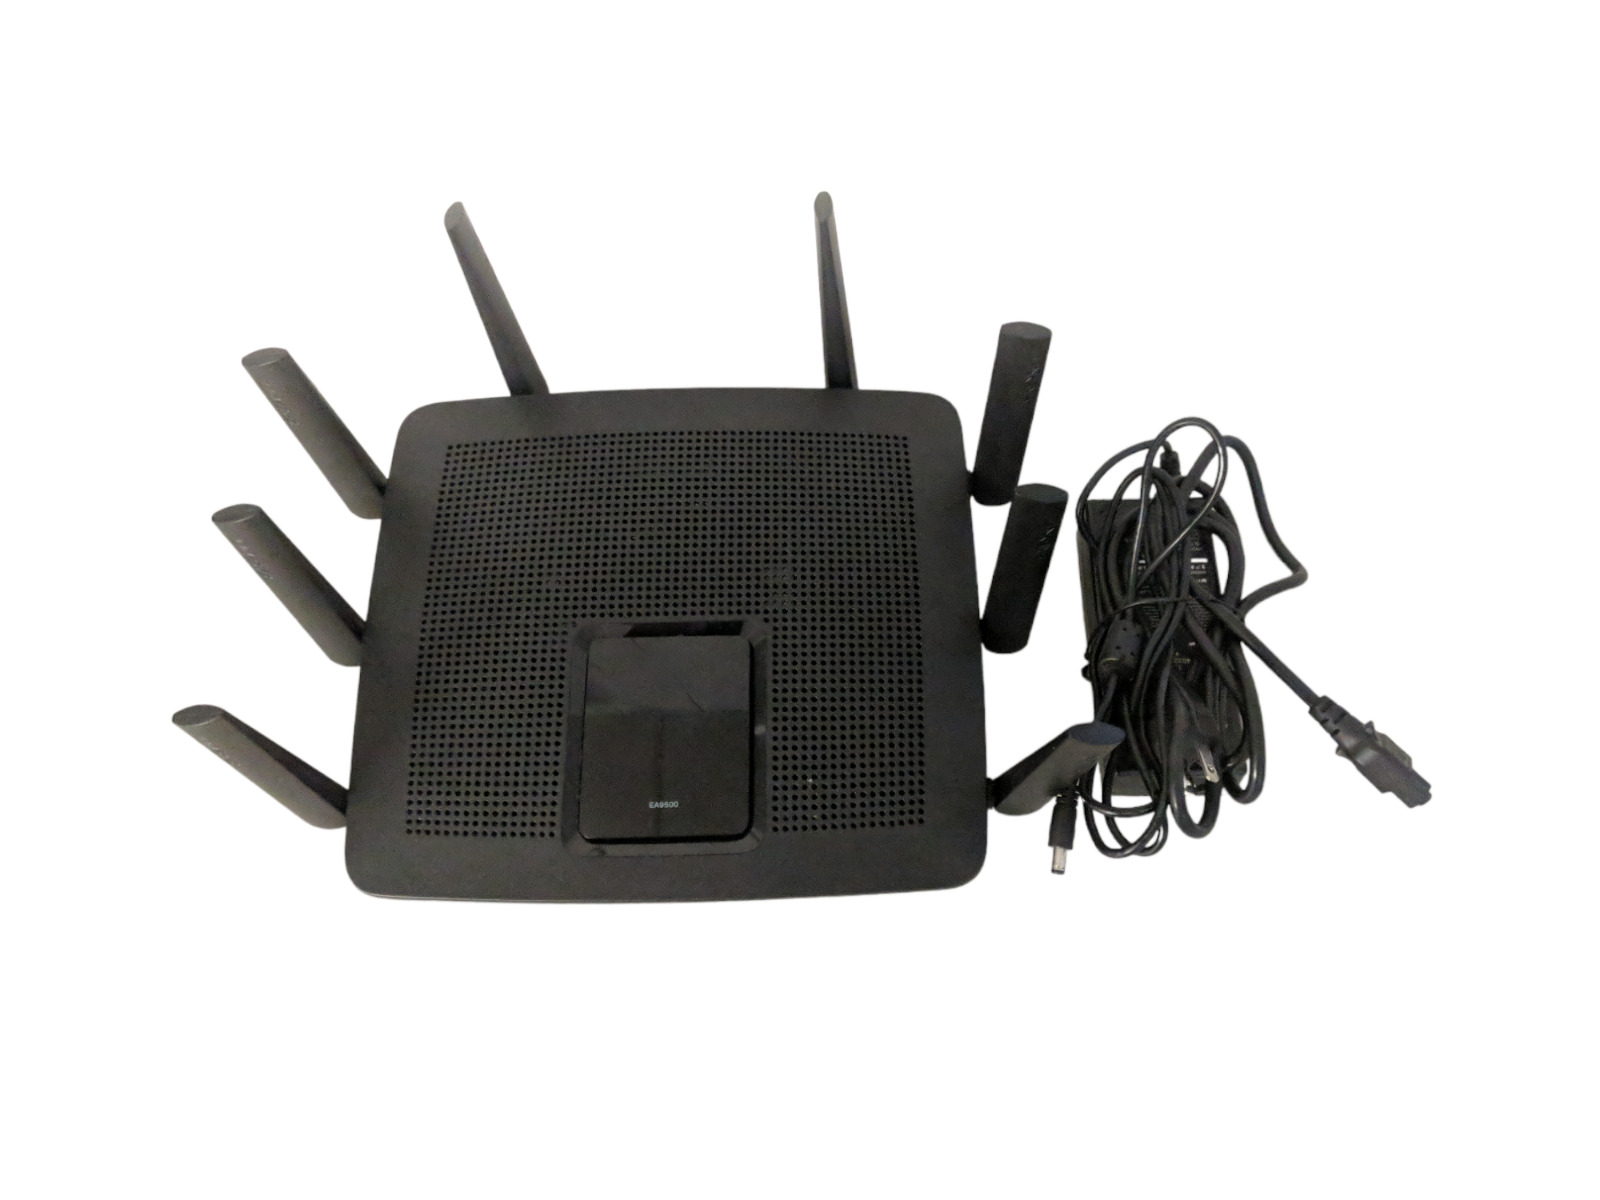 Linksys EA9500 Wireless Gigabit Router